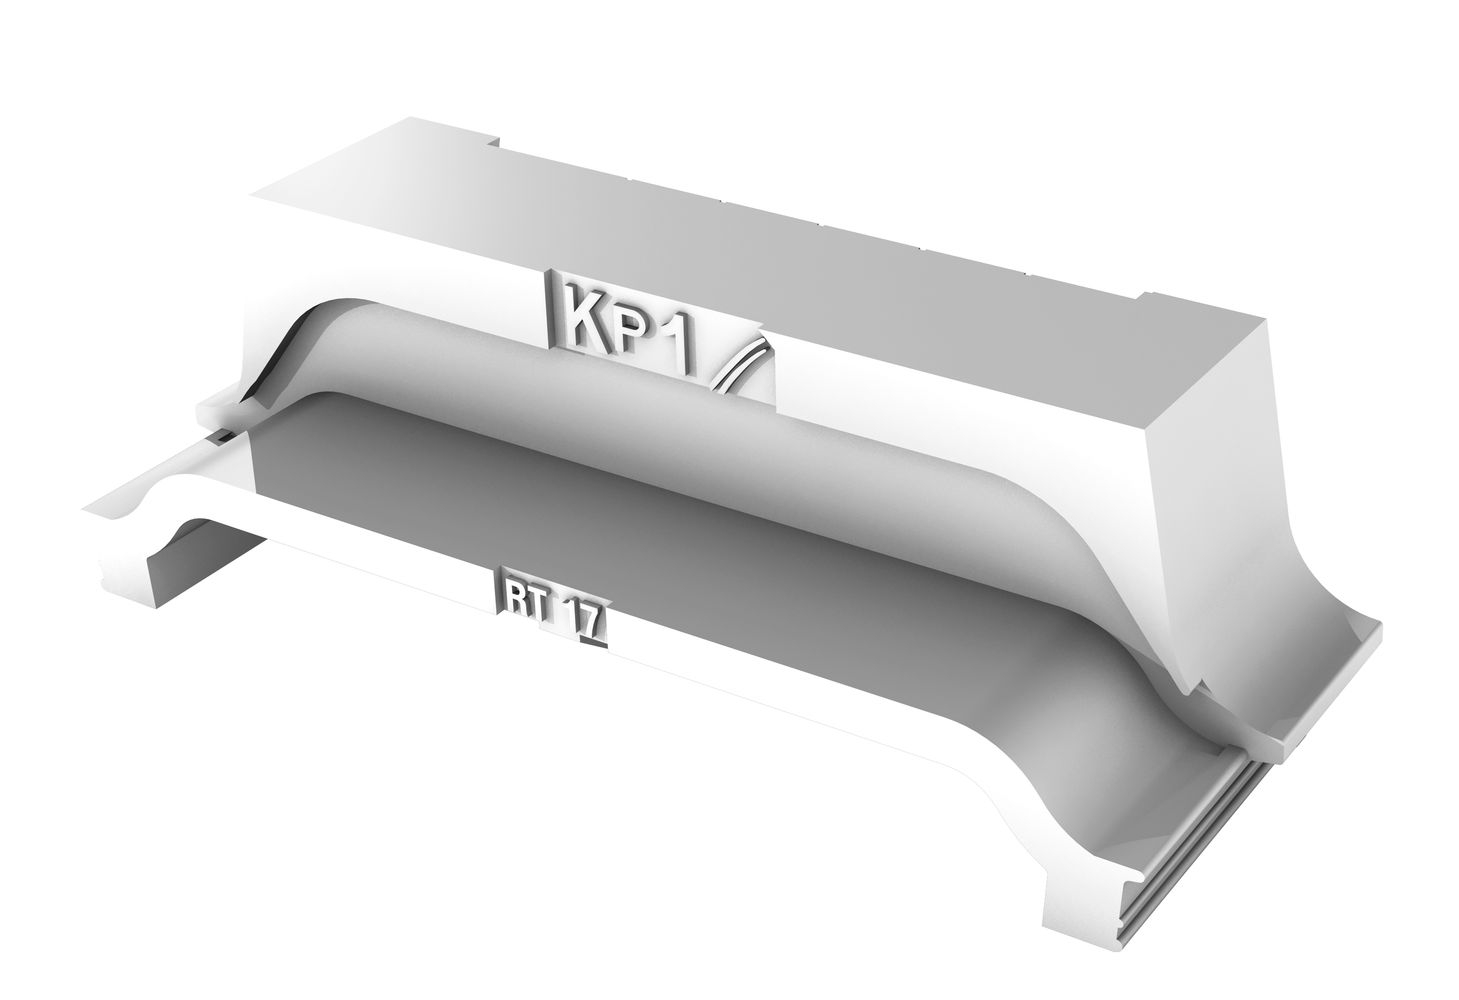 rupteur-thermique-ecorupteur-transversal-db-rt17-0-60m-kp1-0